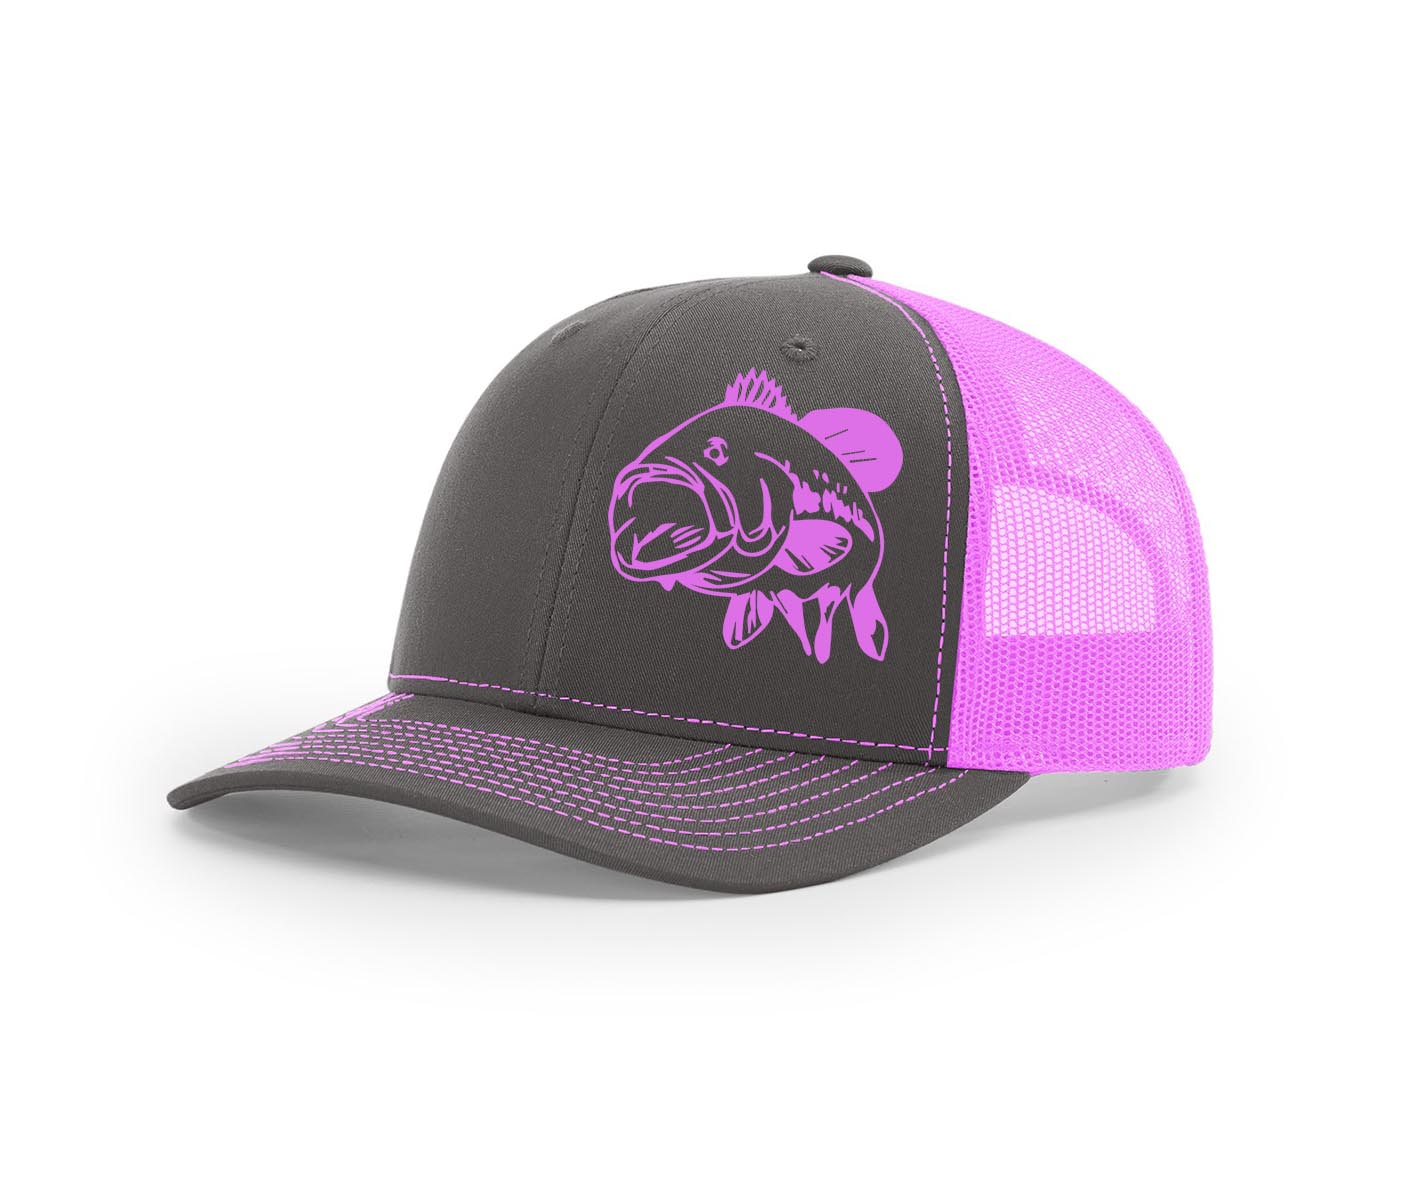 Bass Swamp Cracker Trucker Snapback Hat, Charcoal/Neon Pink